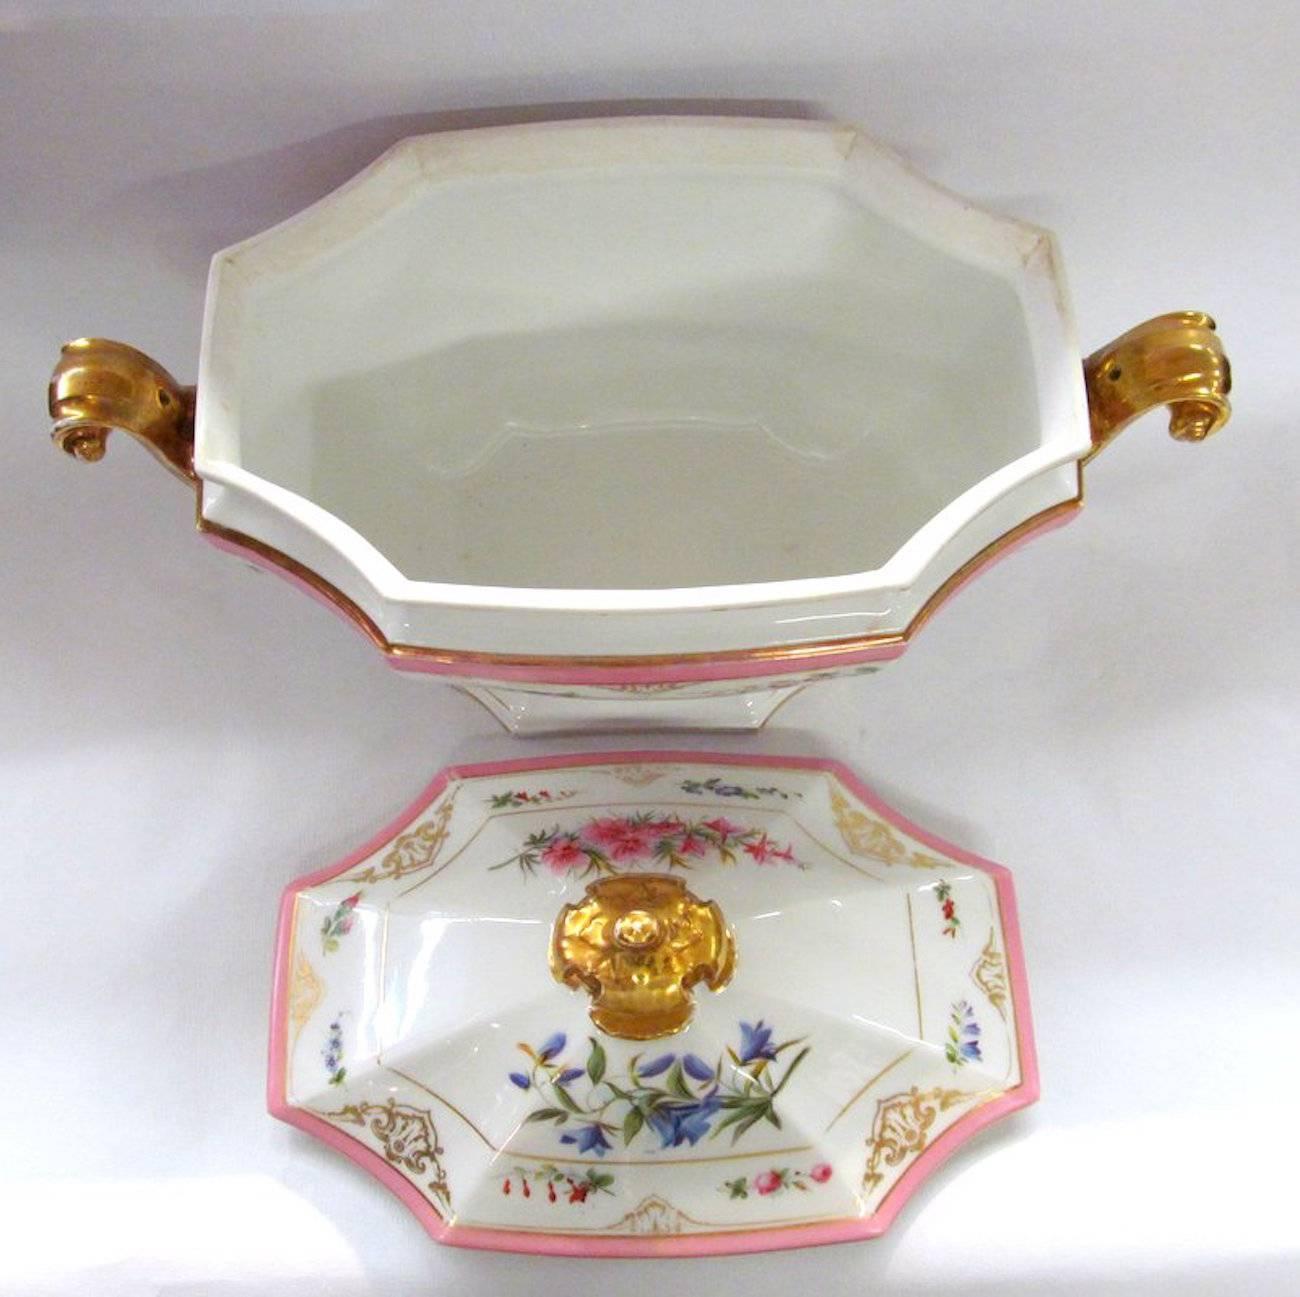 19th Century Antique French Porcelain de Paris Hand-Painted Soup Tureen and Matching Platter